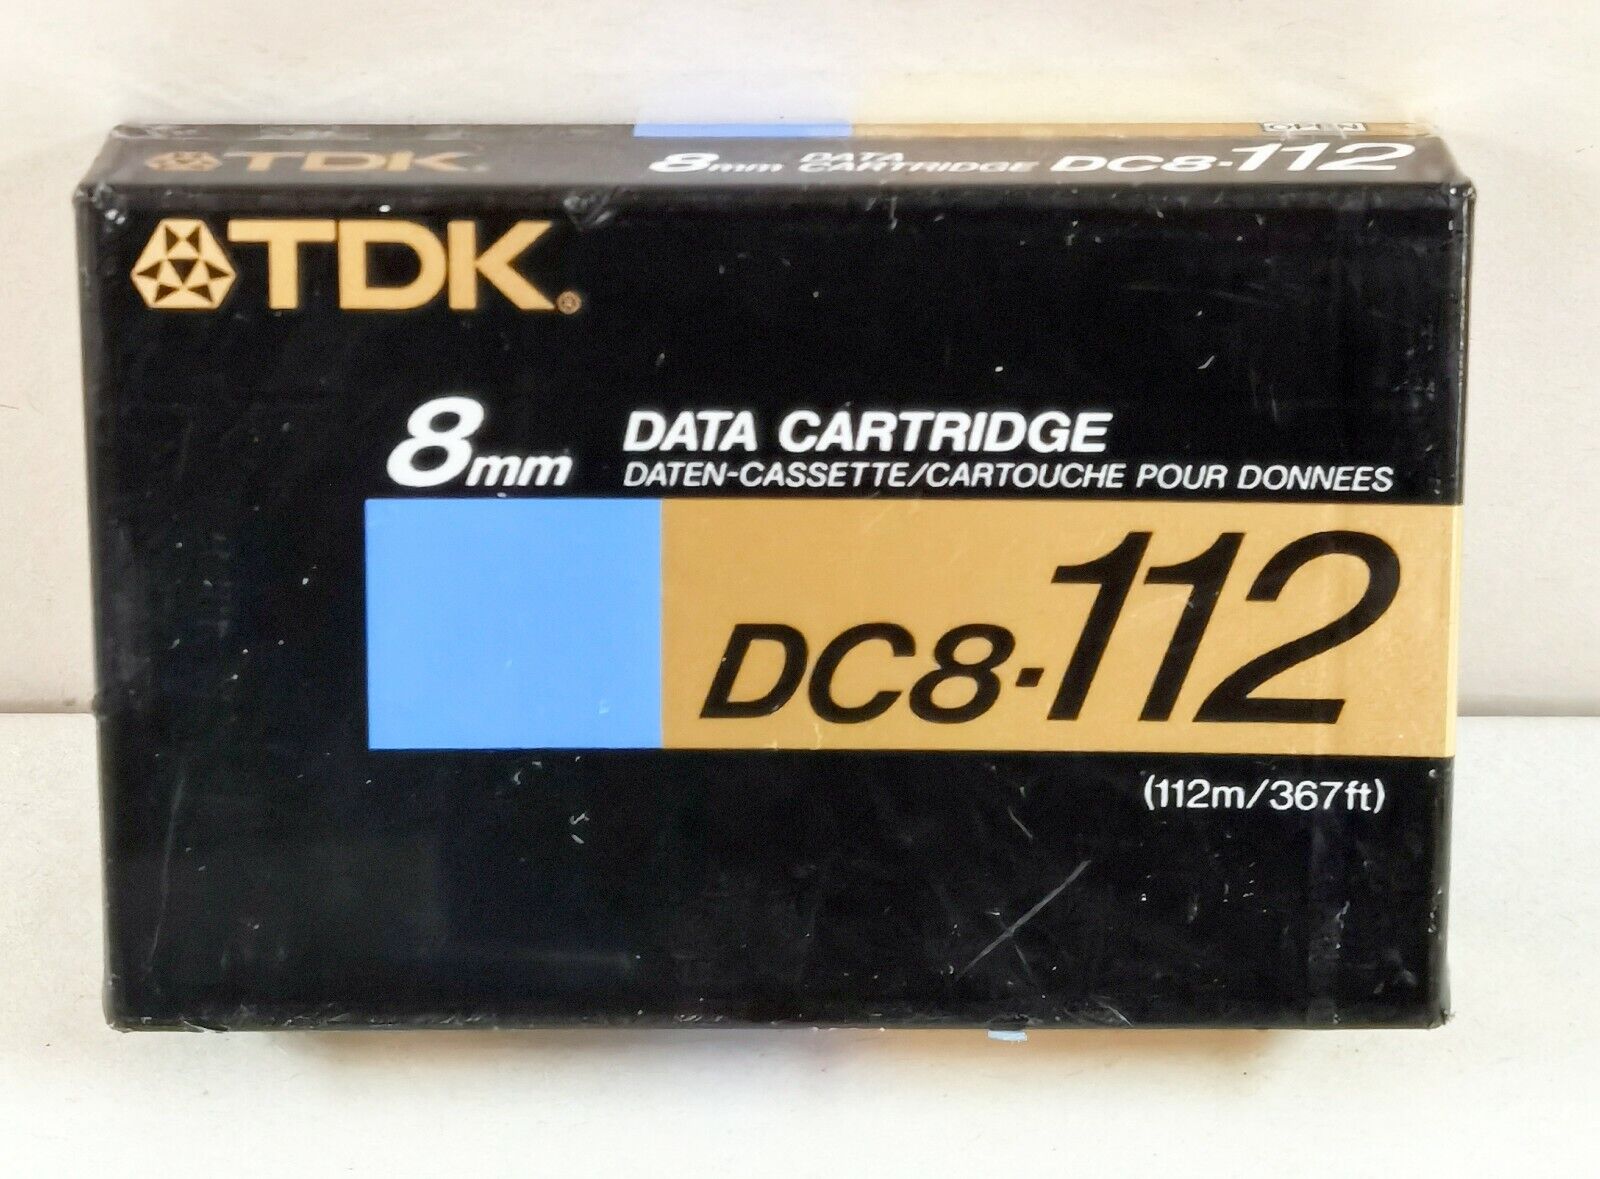 TDK 8mm Data Cartridge DC8-112 367ft (112m)  